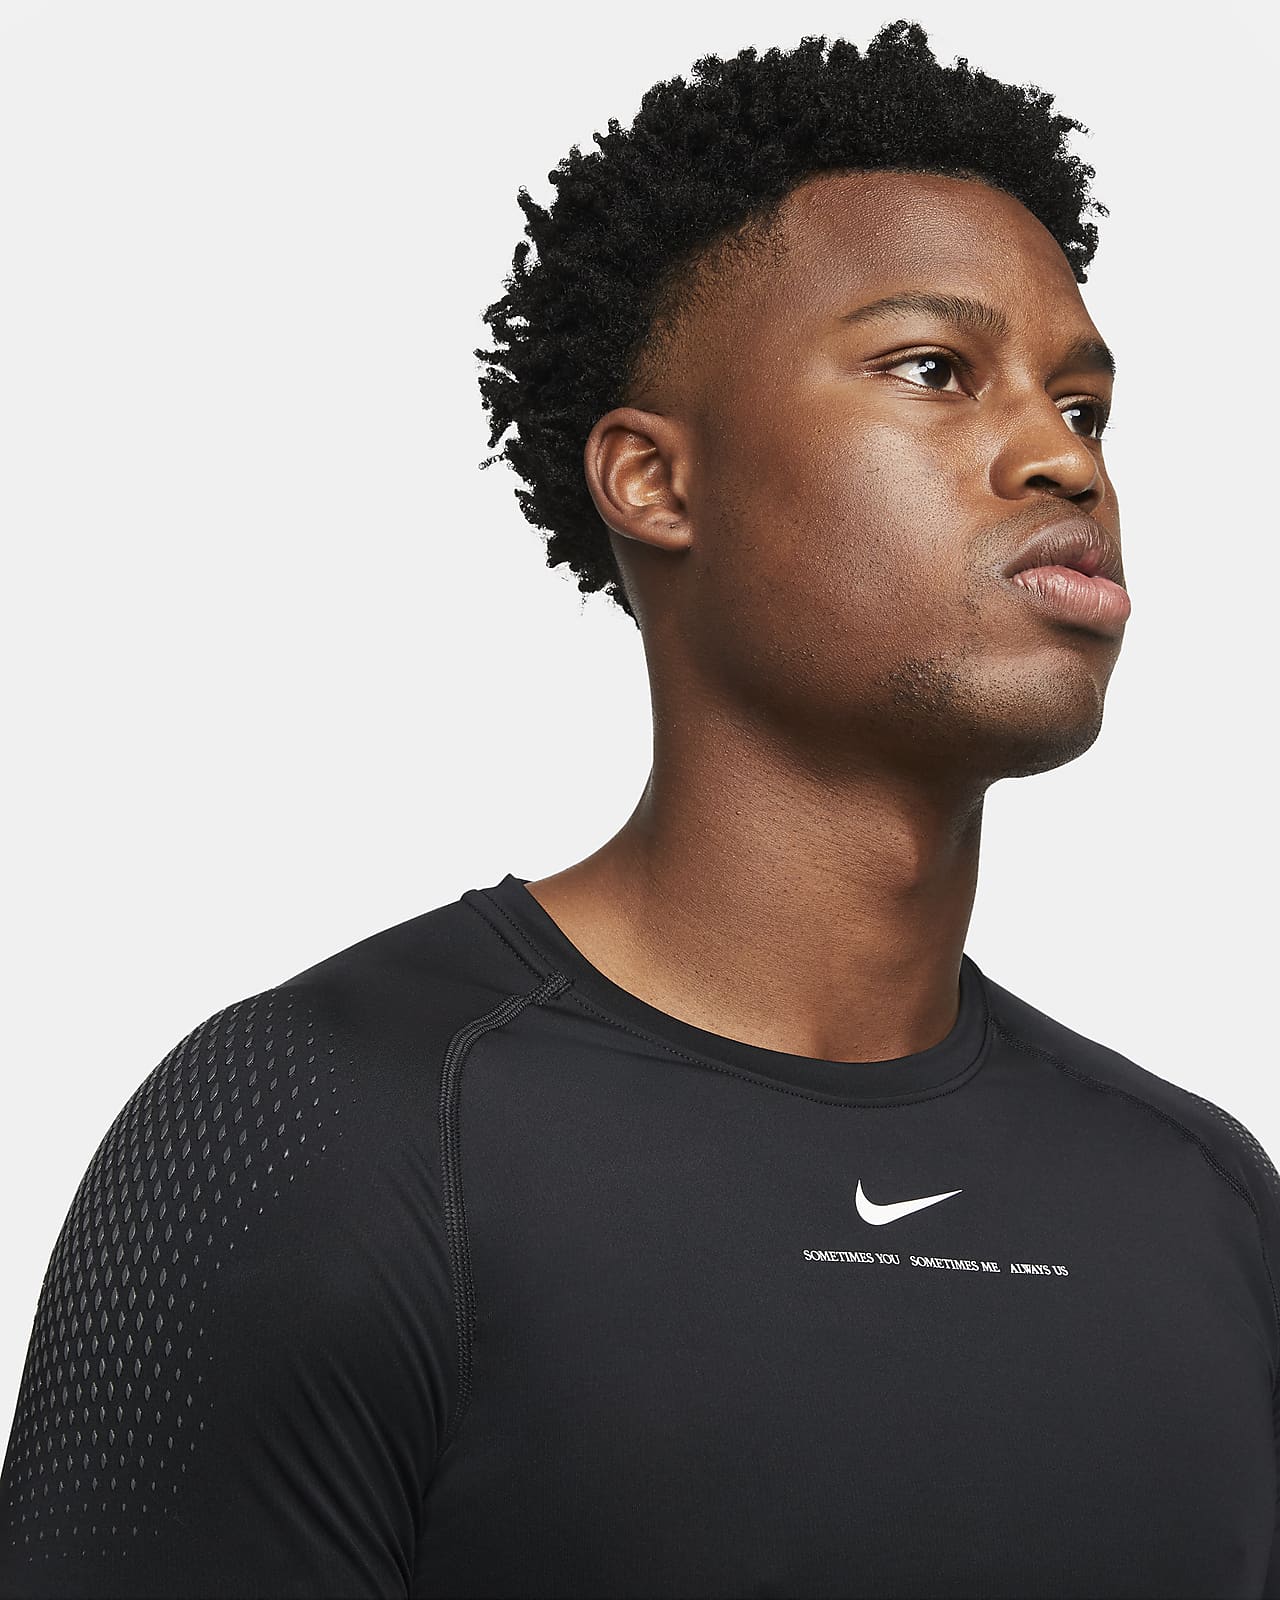 NOCTA Men's Long-Sleeve Base Layer Basketball Top. Nike.com